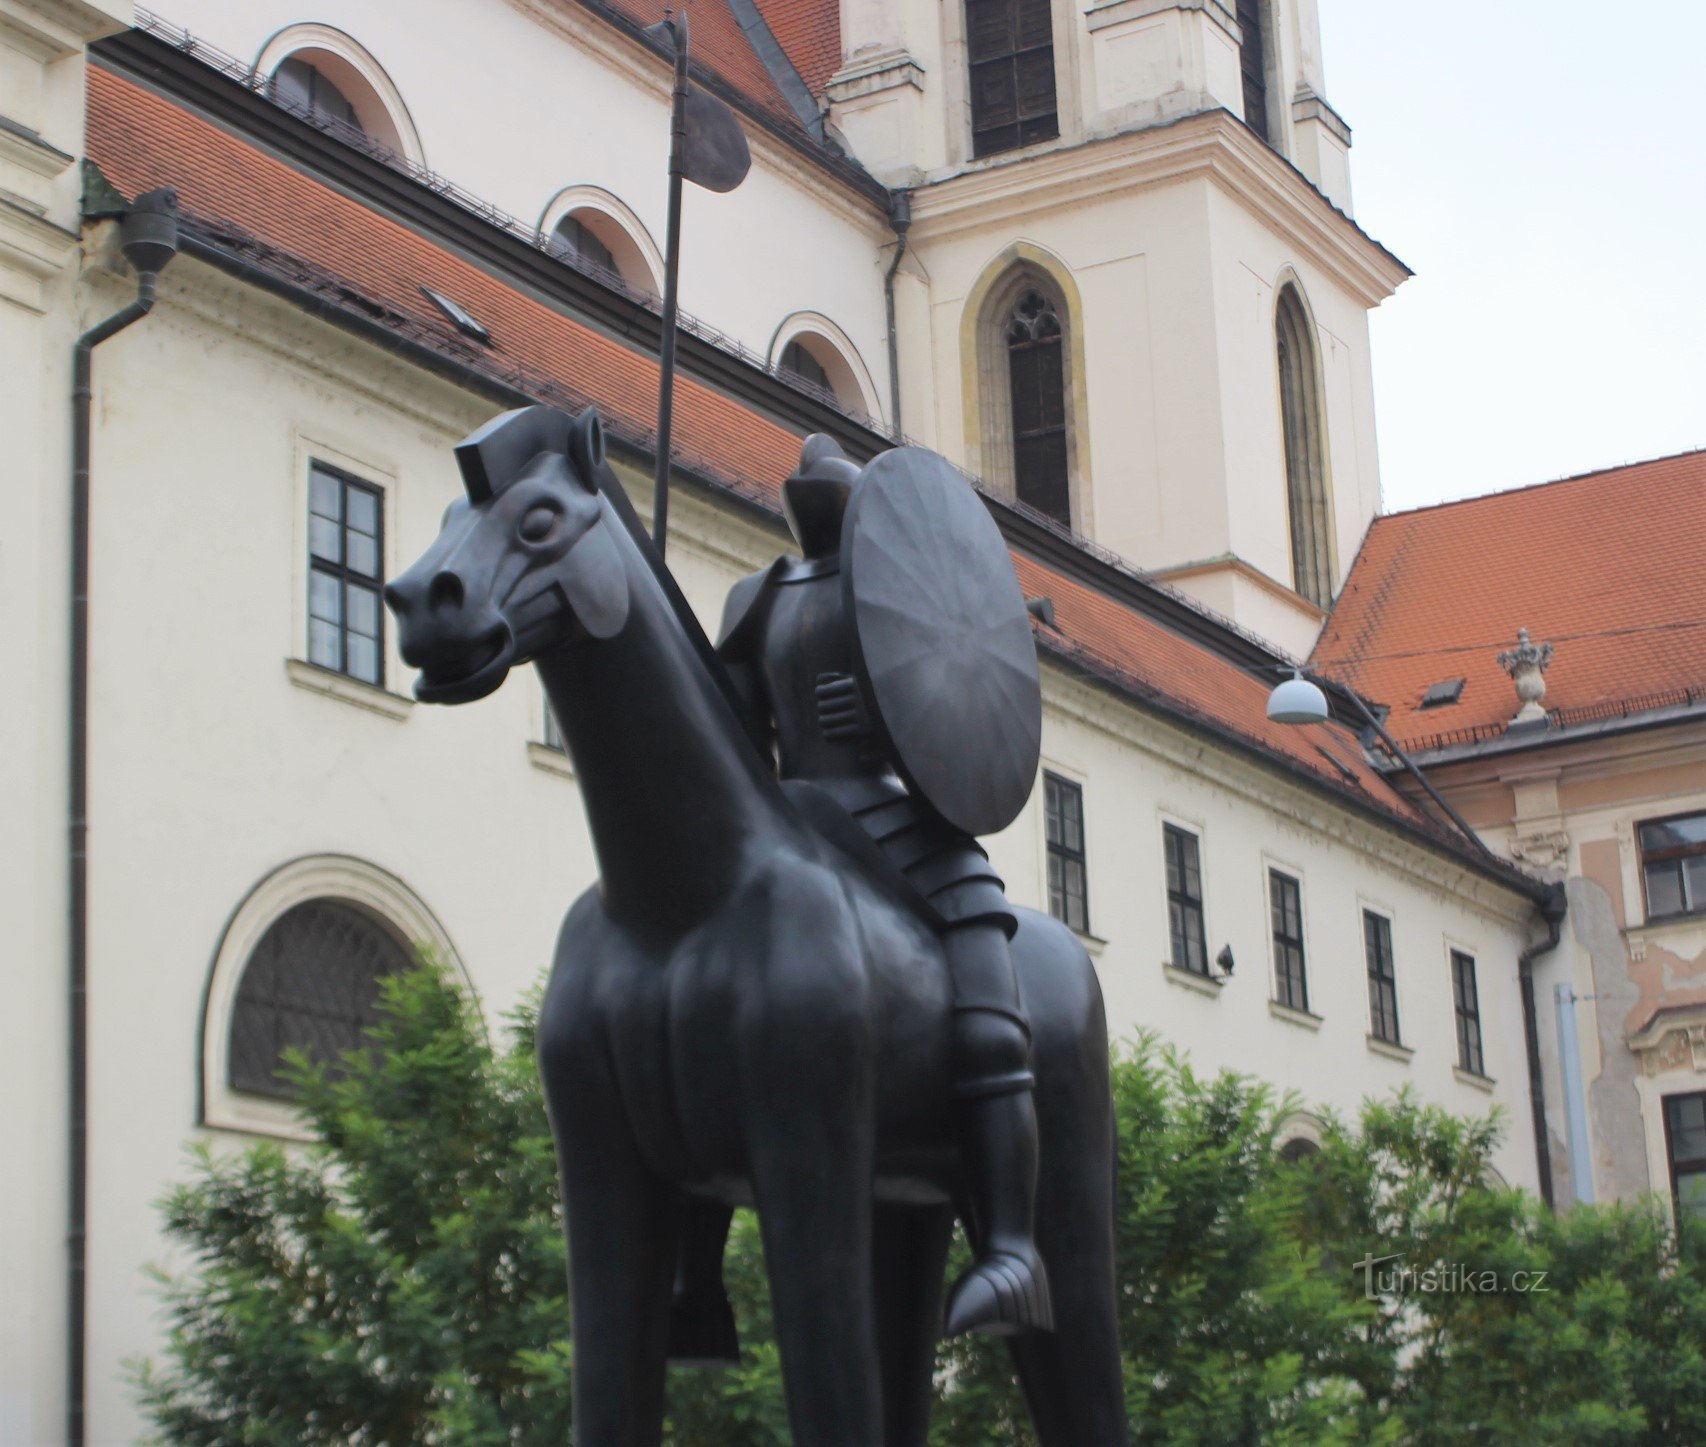 Jost of Luxembourg on horseback